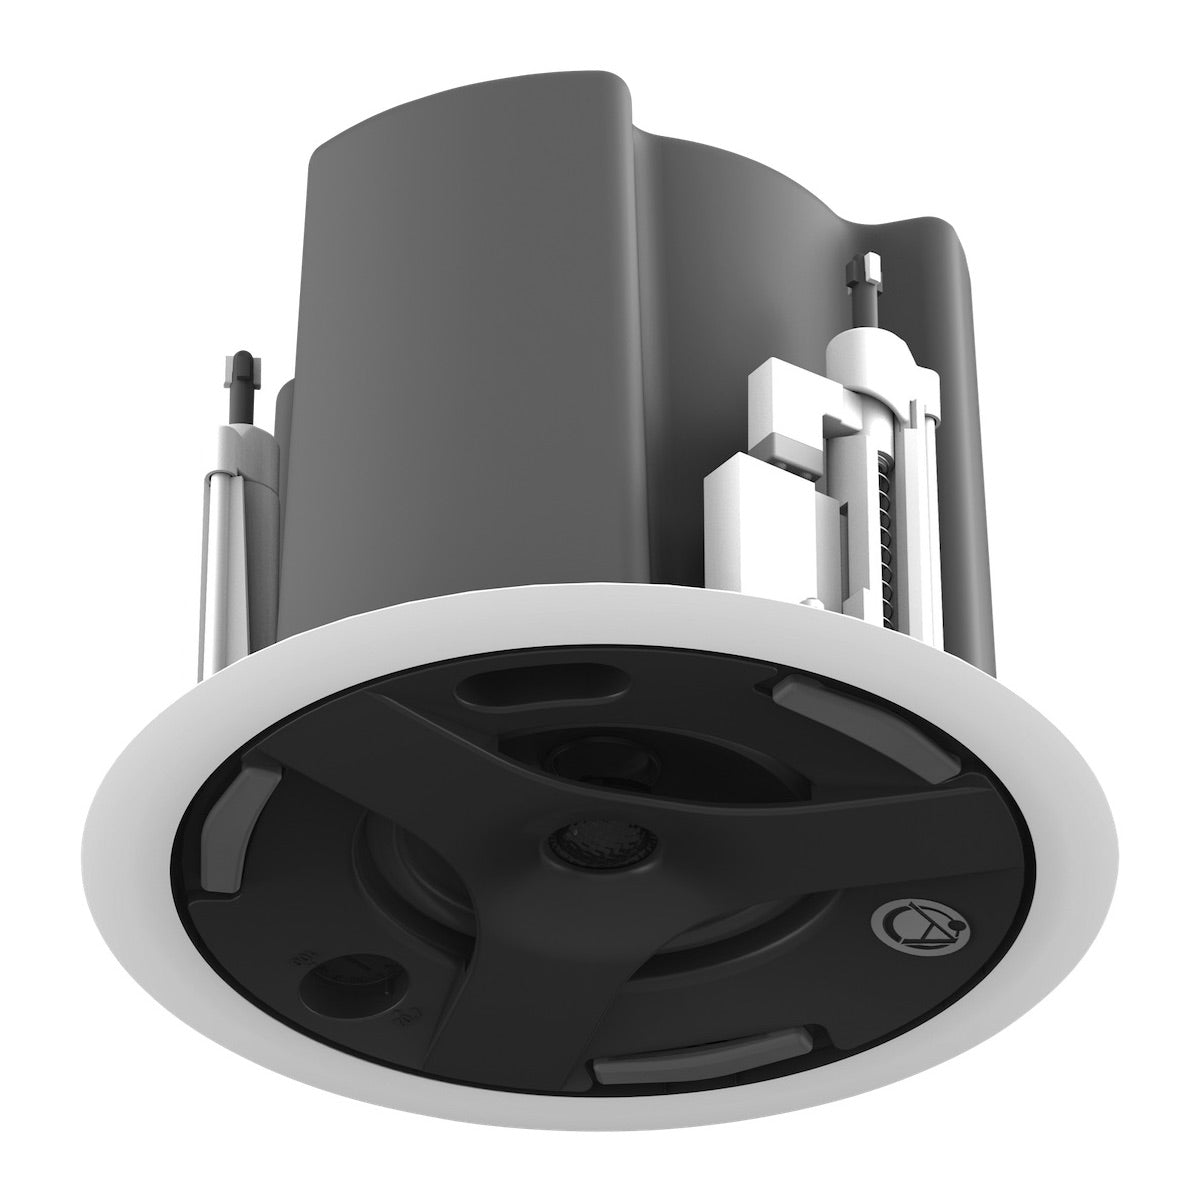 AtlasIED FAP43T-W - 32W 4.5-in Ceiling Speaker, grill removed